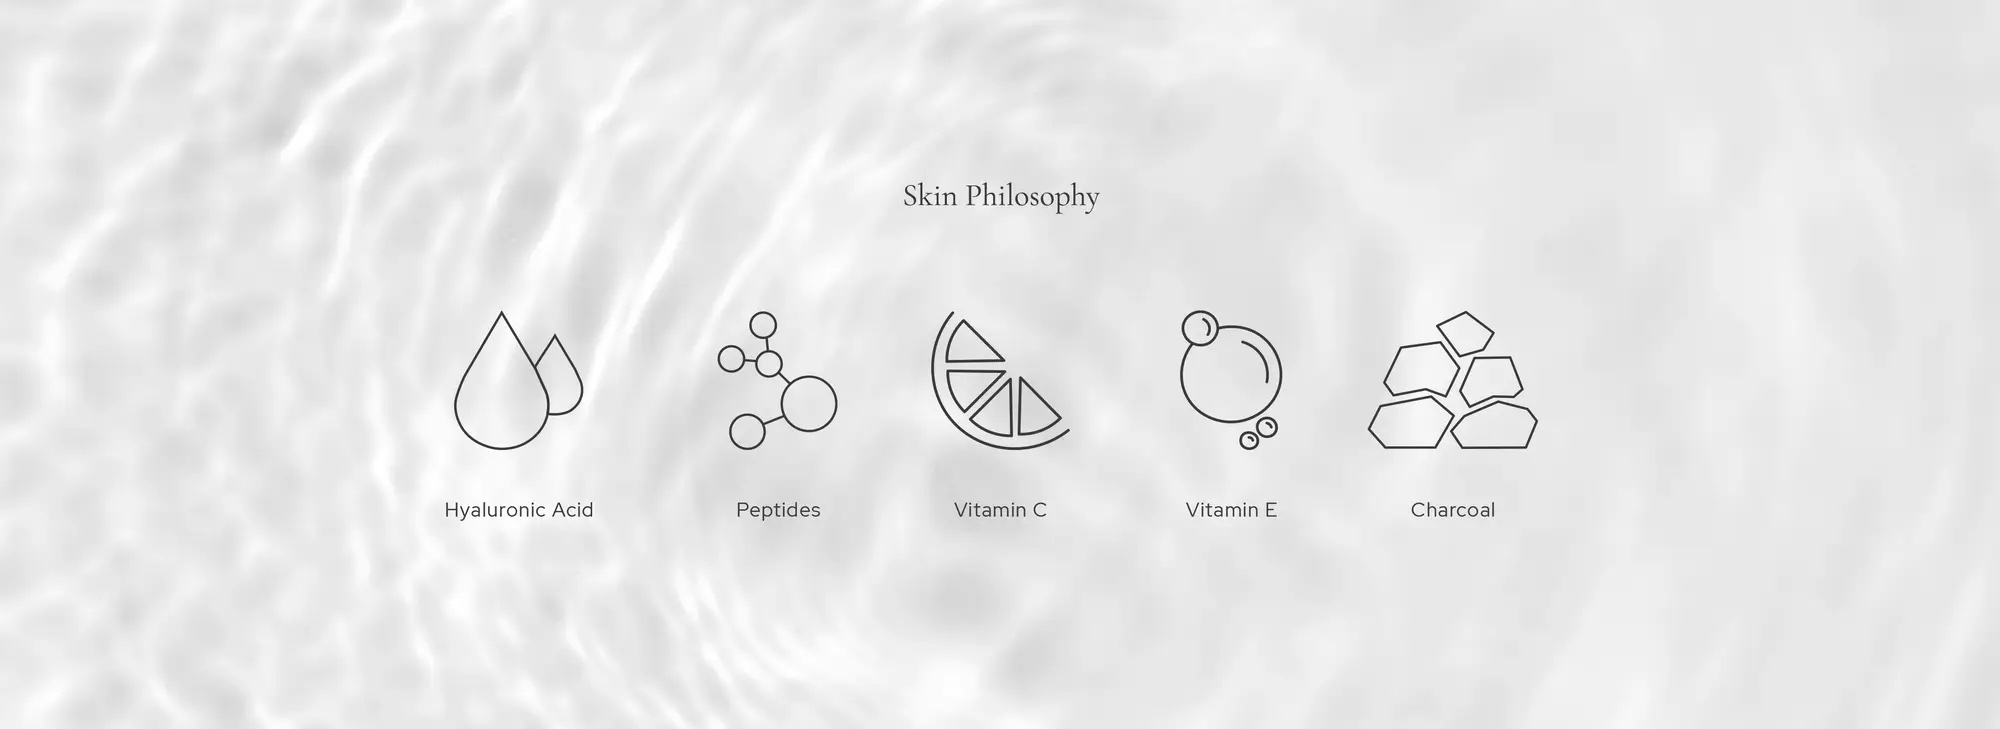 Skin Philosophy